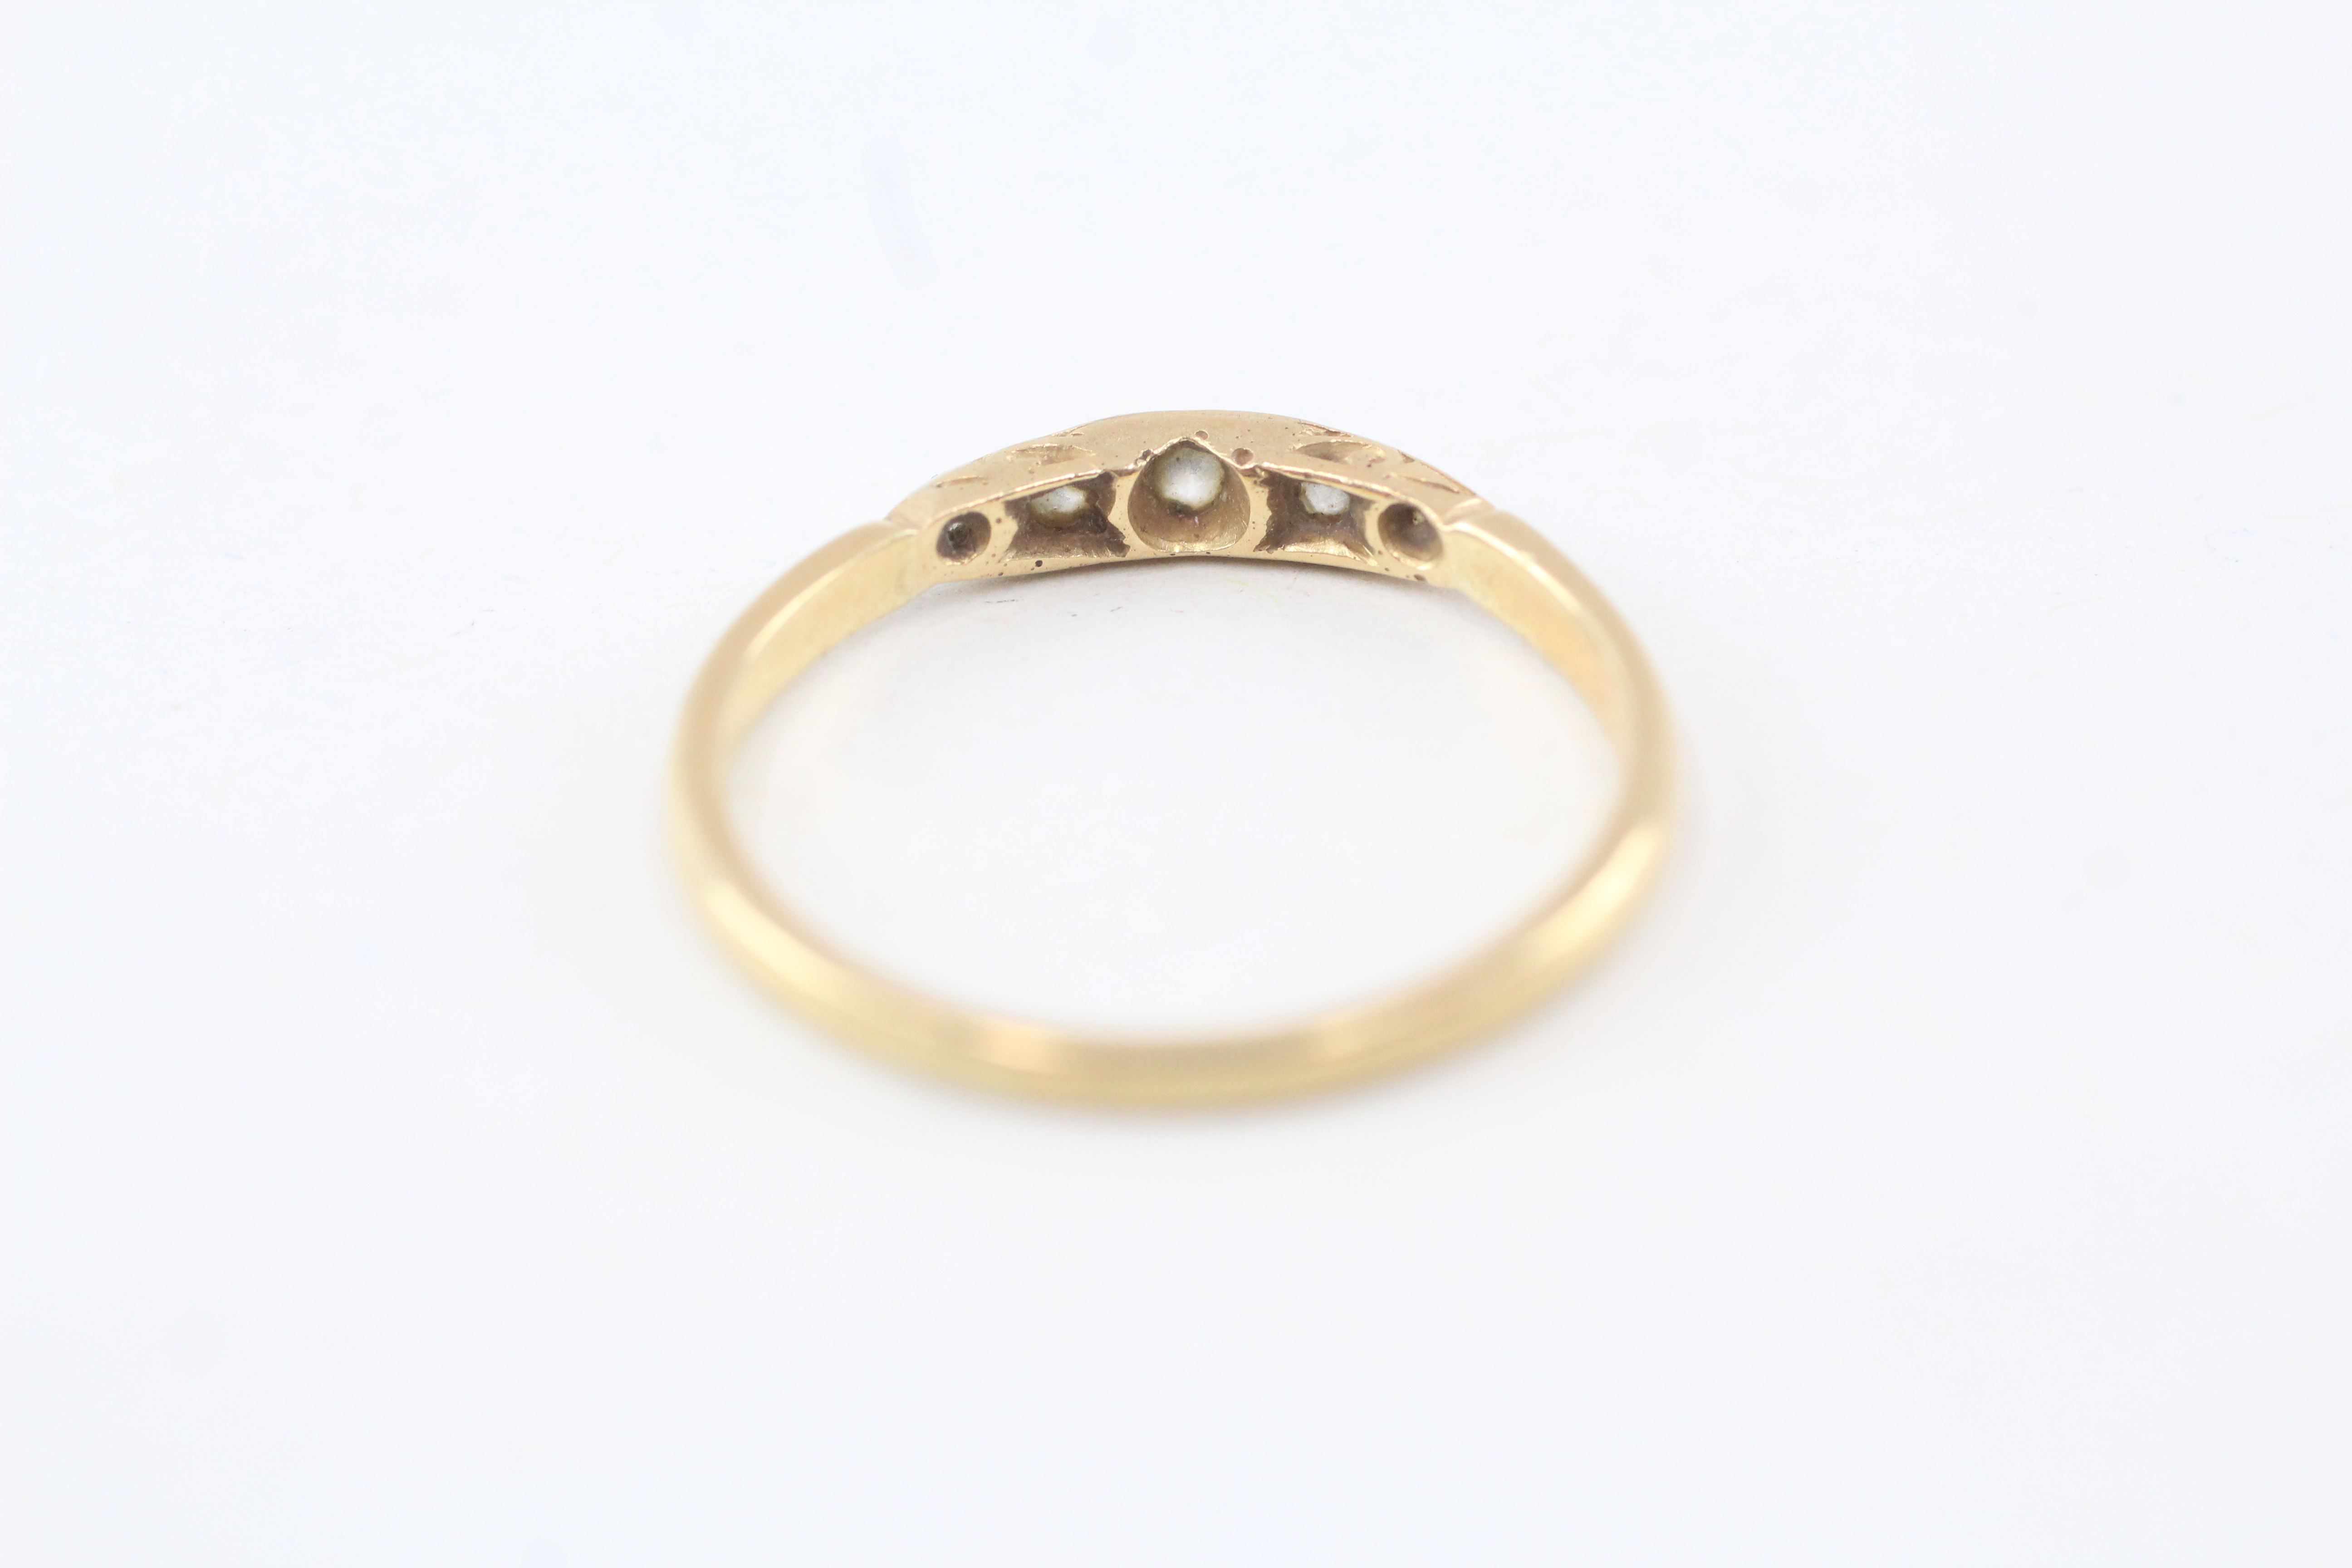 18ct gold single cut diamond five stone ring Size P - 2 g - Image 3 of 4